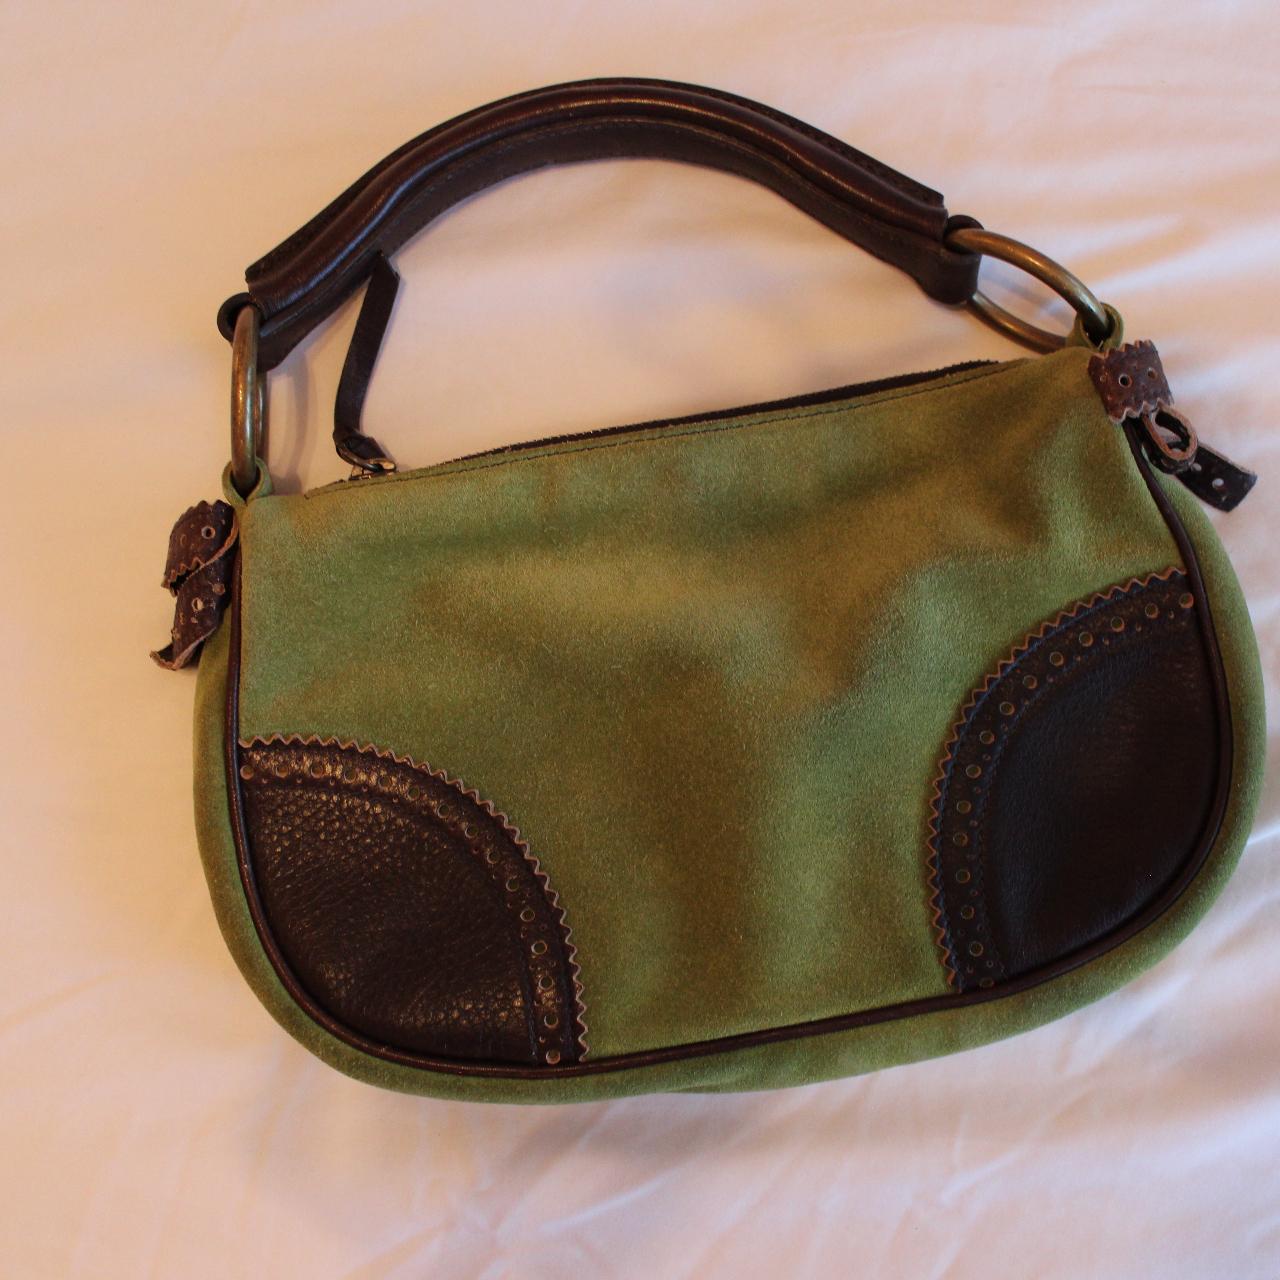 Miu Miu Women's Green and Brown Bag (2)